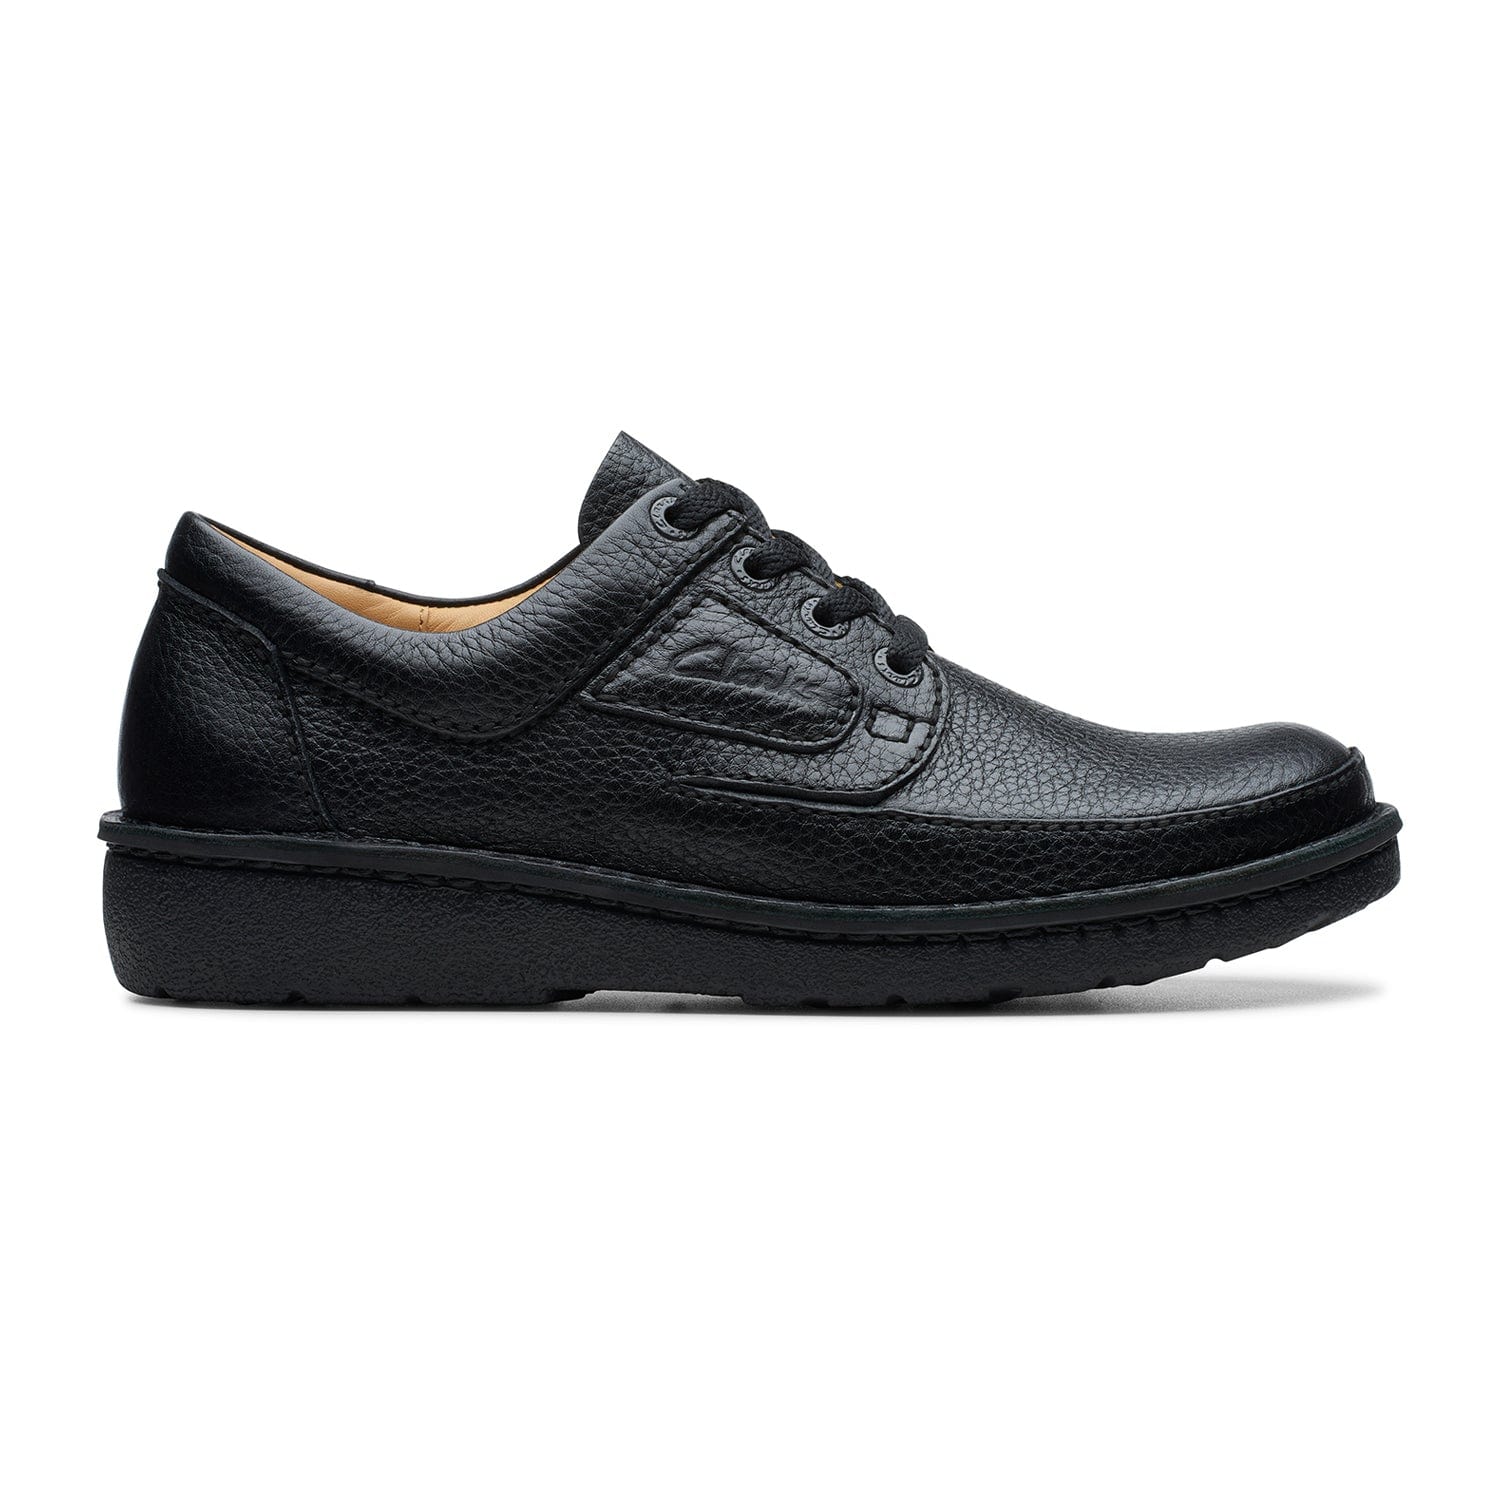 Clarks NATURE II Shoes - Black - 261420397 - G Width (Standard Fit)